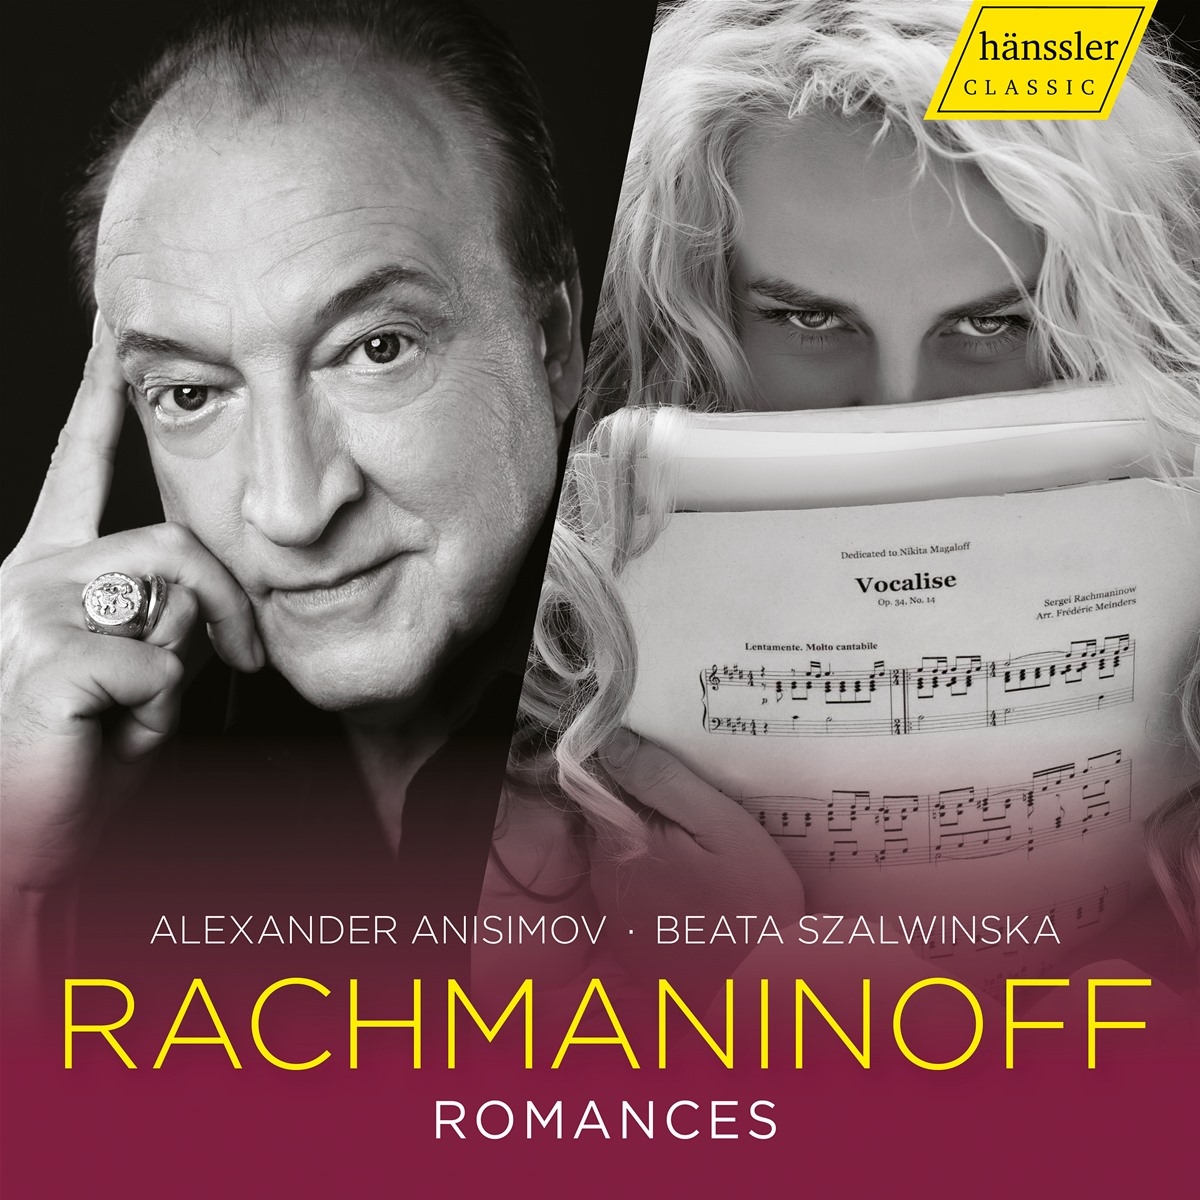 Rachmaninoff-Romances/Alexander Anisimov/Beata